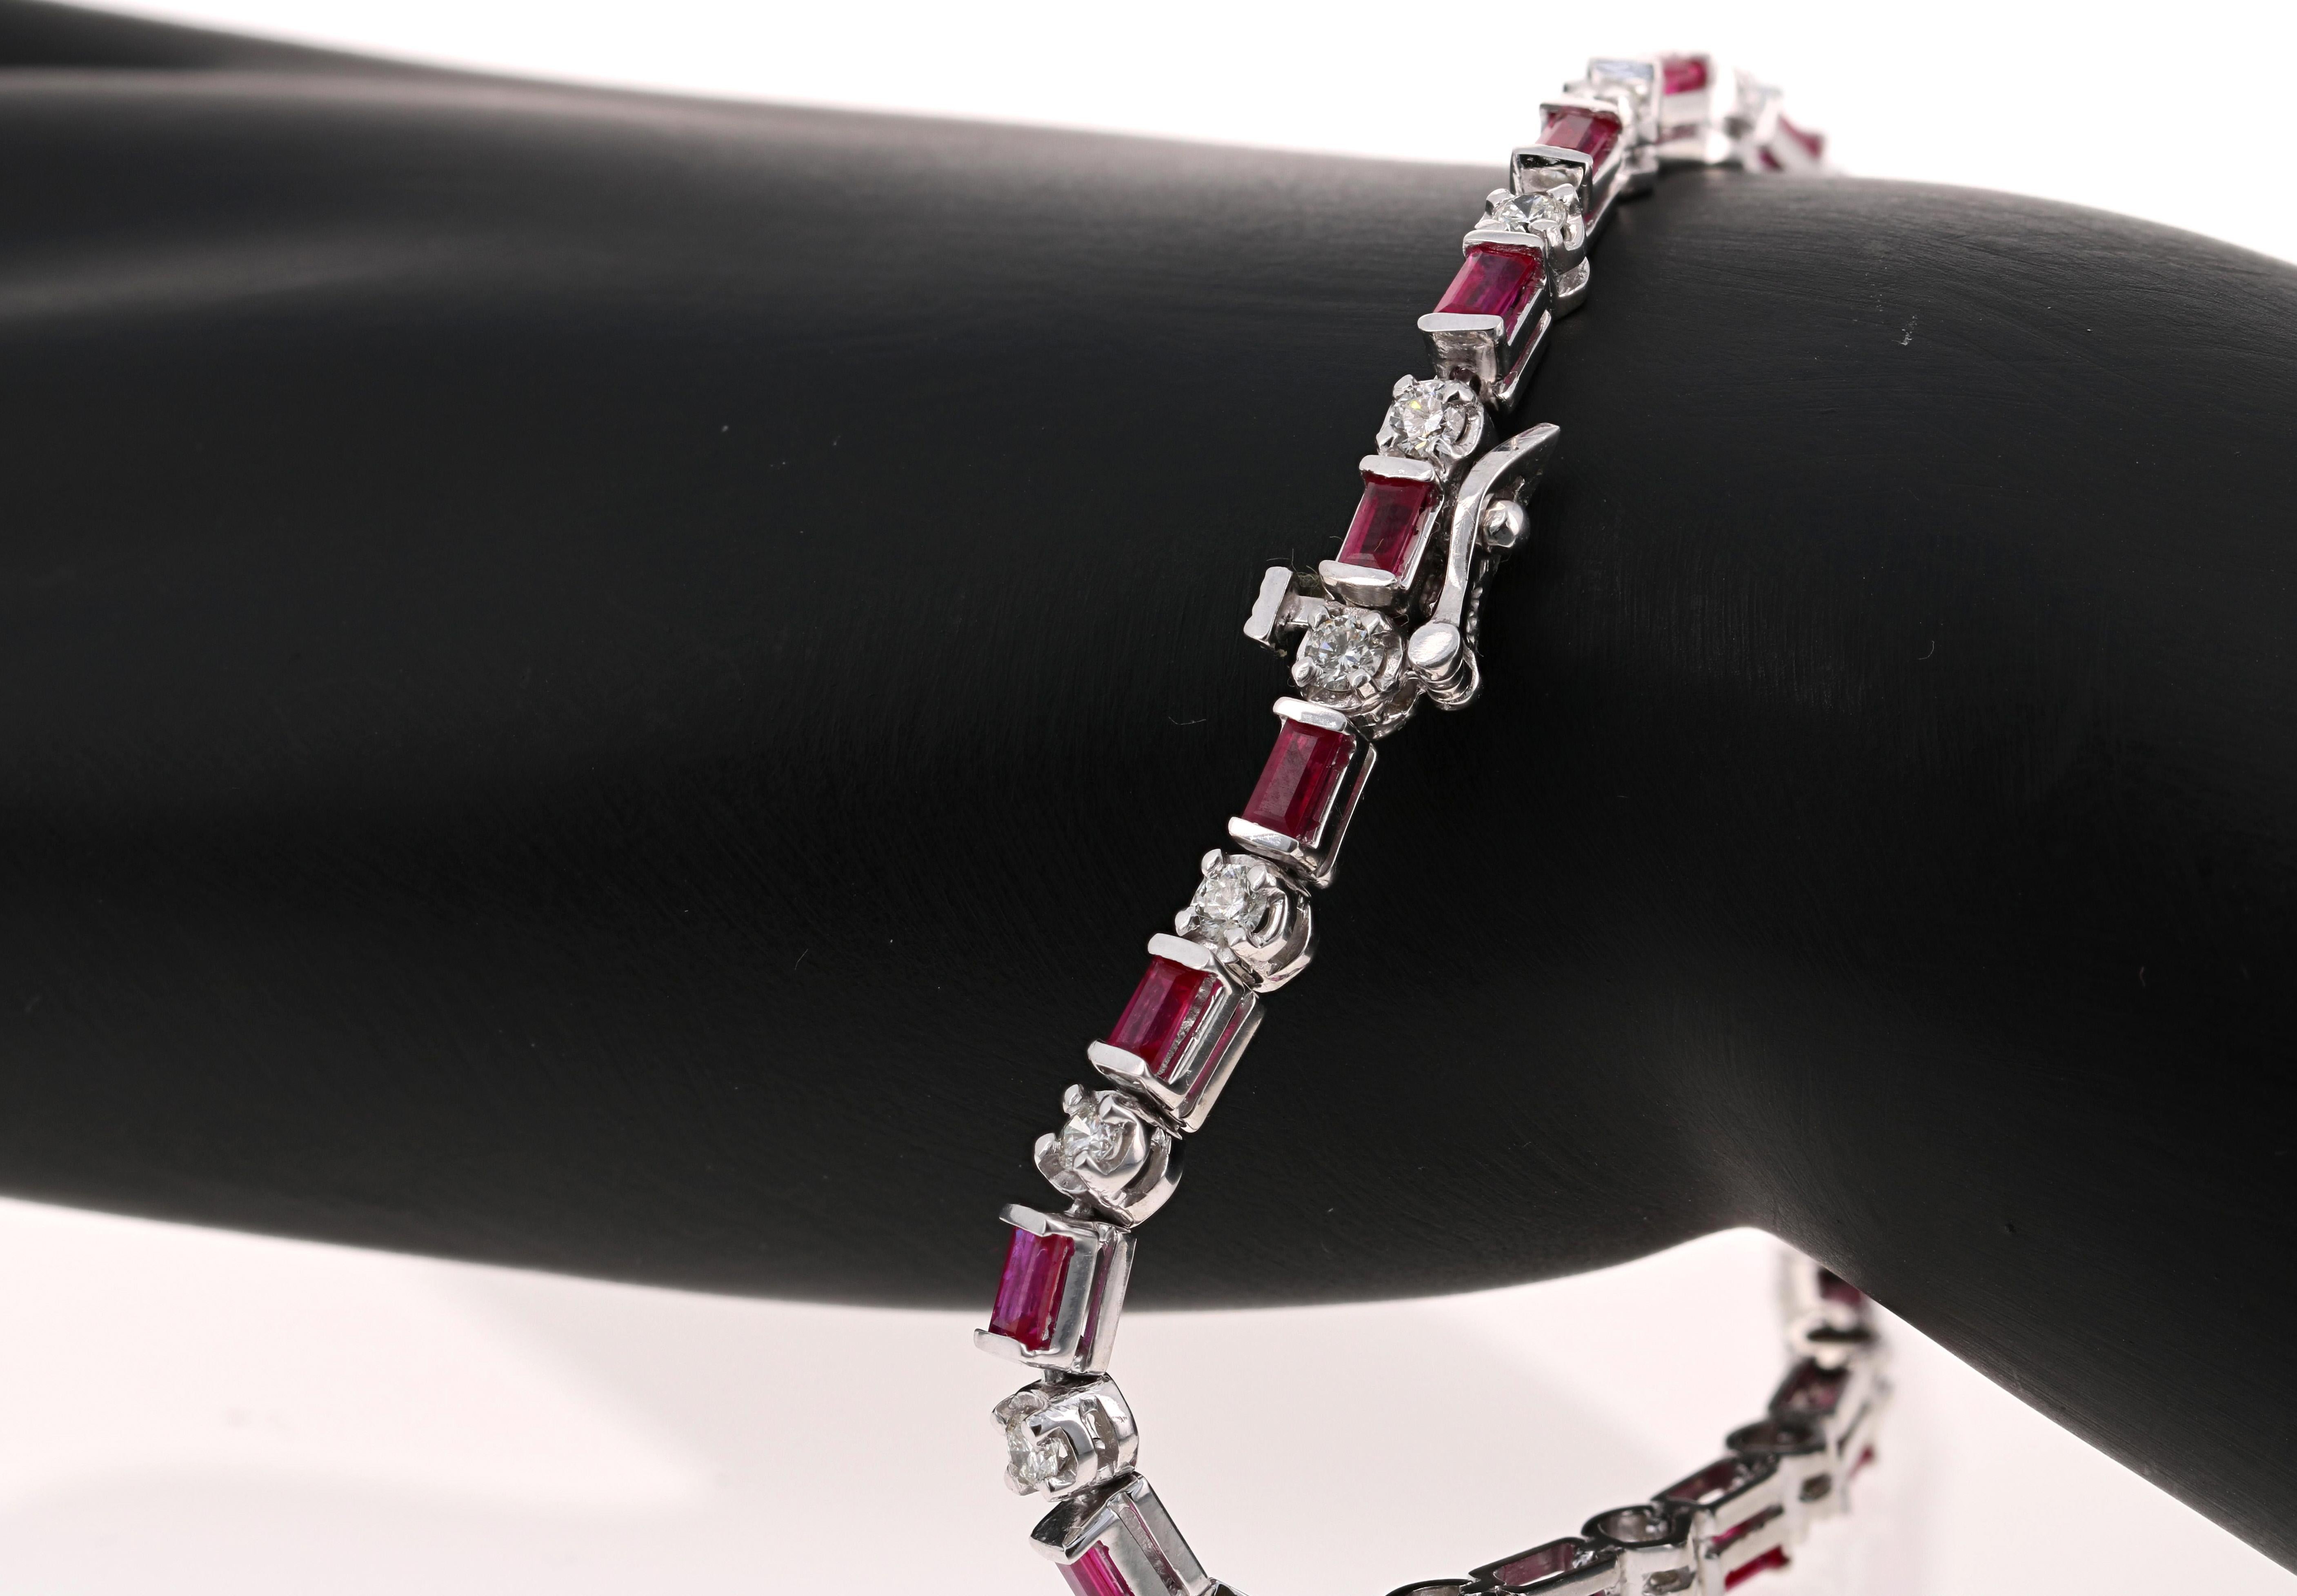 Beautiful Ruby Diamond Bracelet! 

This Bracelet has 20 Natural Baguette Cut Rubies that weigh 4.00 Carats. It also has 20 Round Cut Diamonds that weigh 1.50 Carats. The total carat weight of the bracelet is 5.50 Carats. (Clarity: VS, Color: H)

It